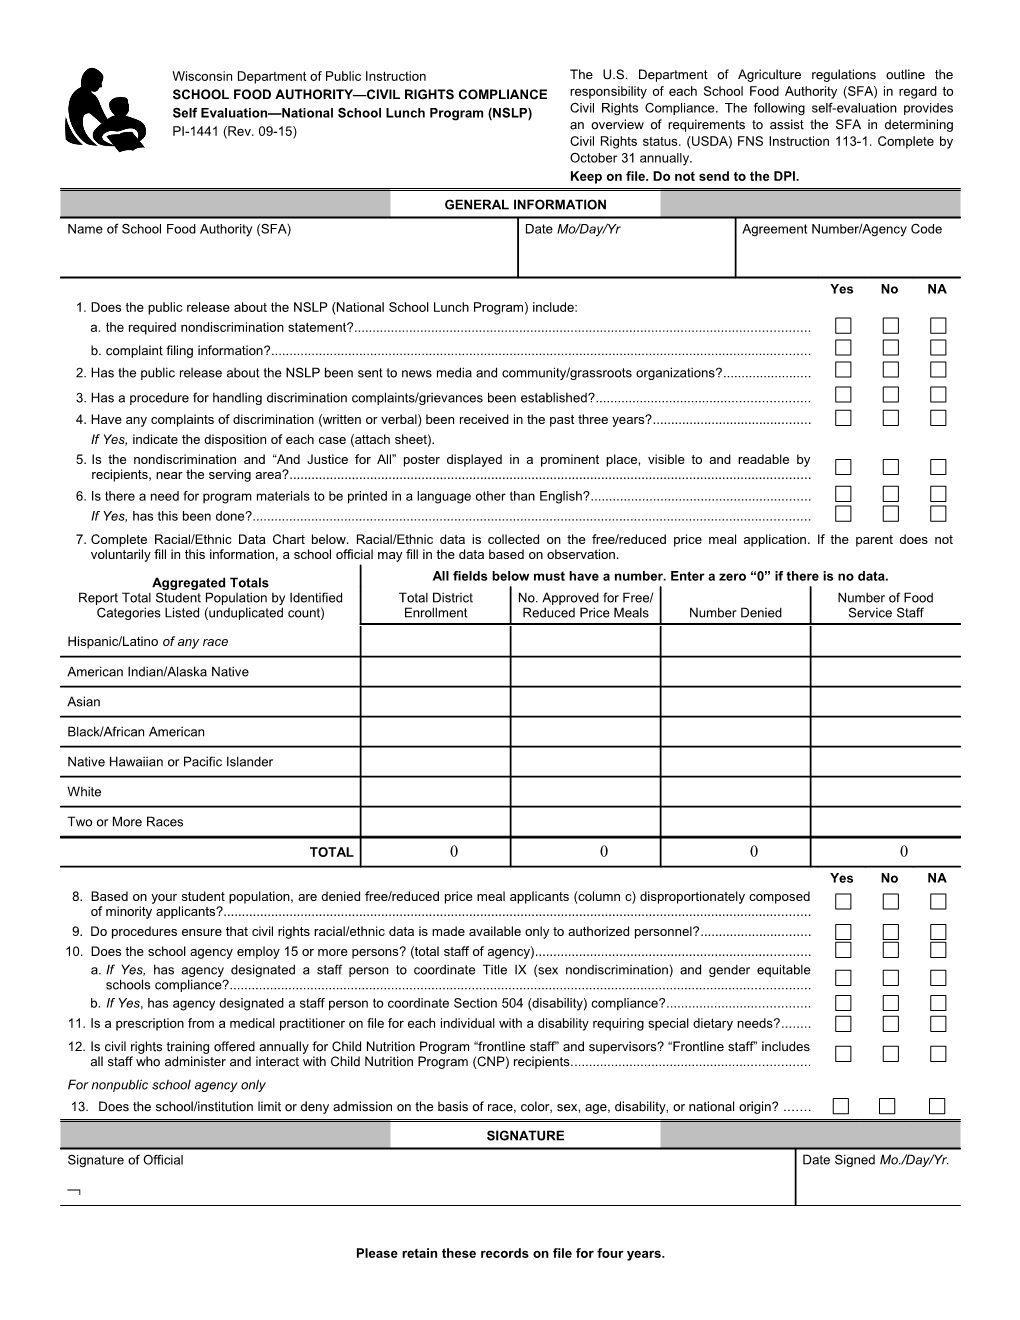 PI-1441 Civil Rights Compliance Self Evaluation